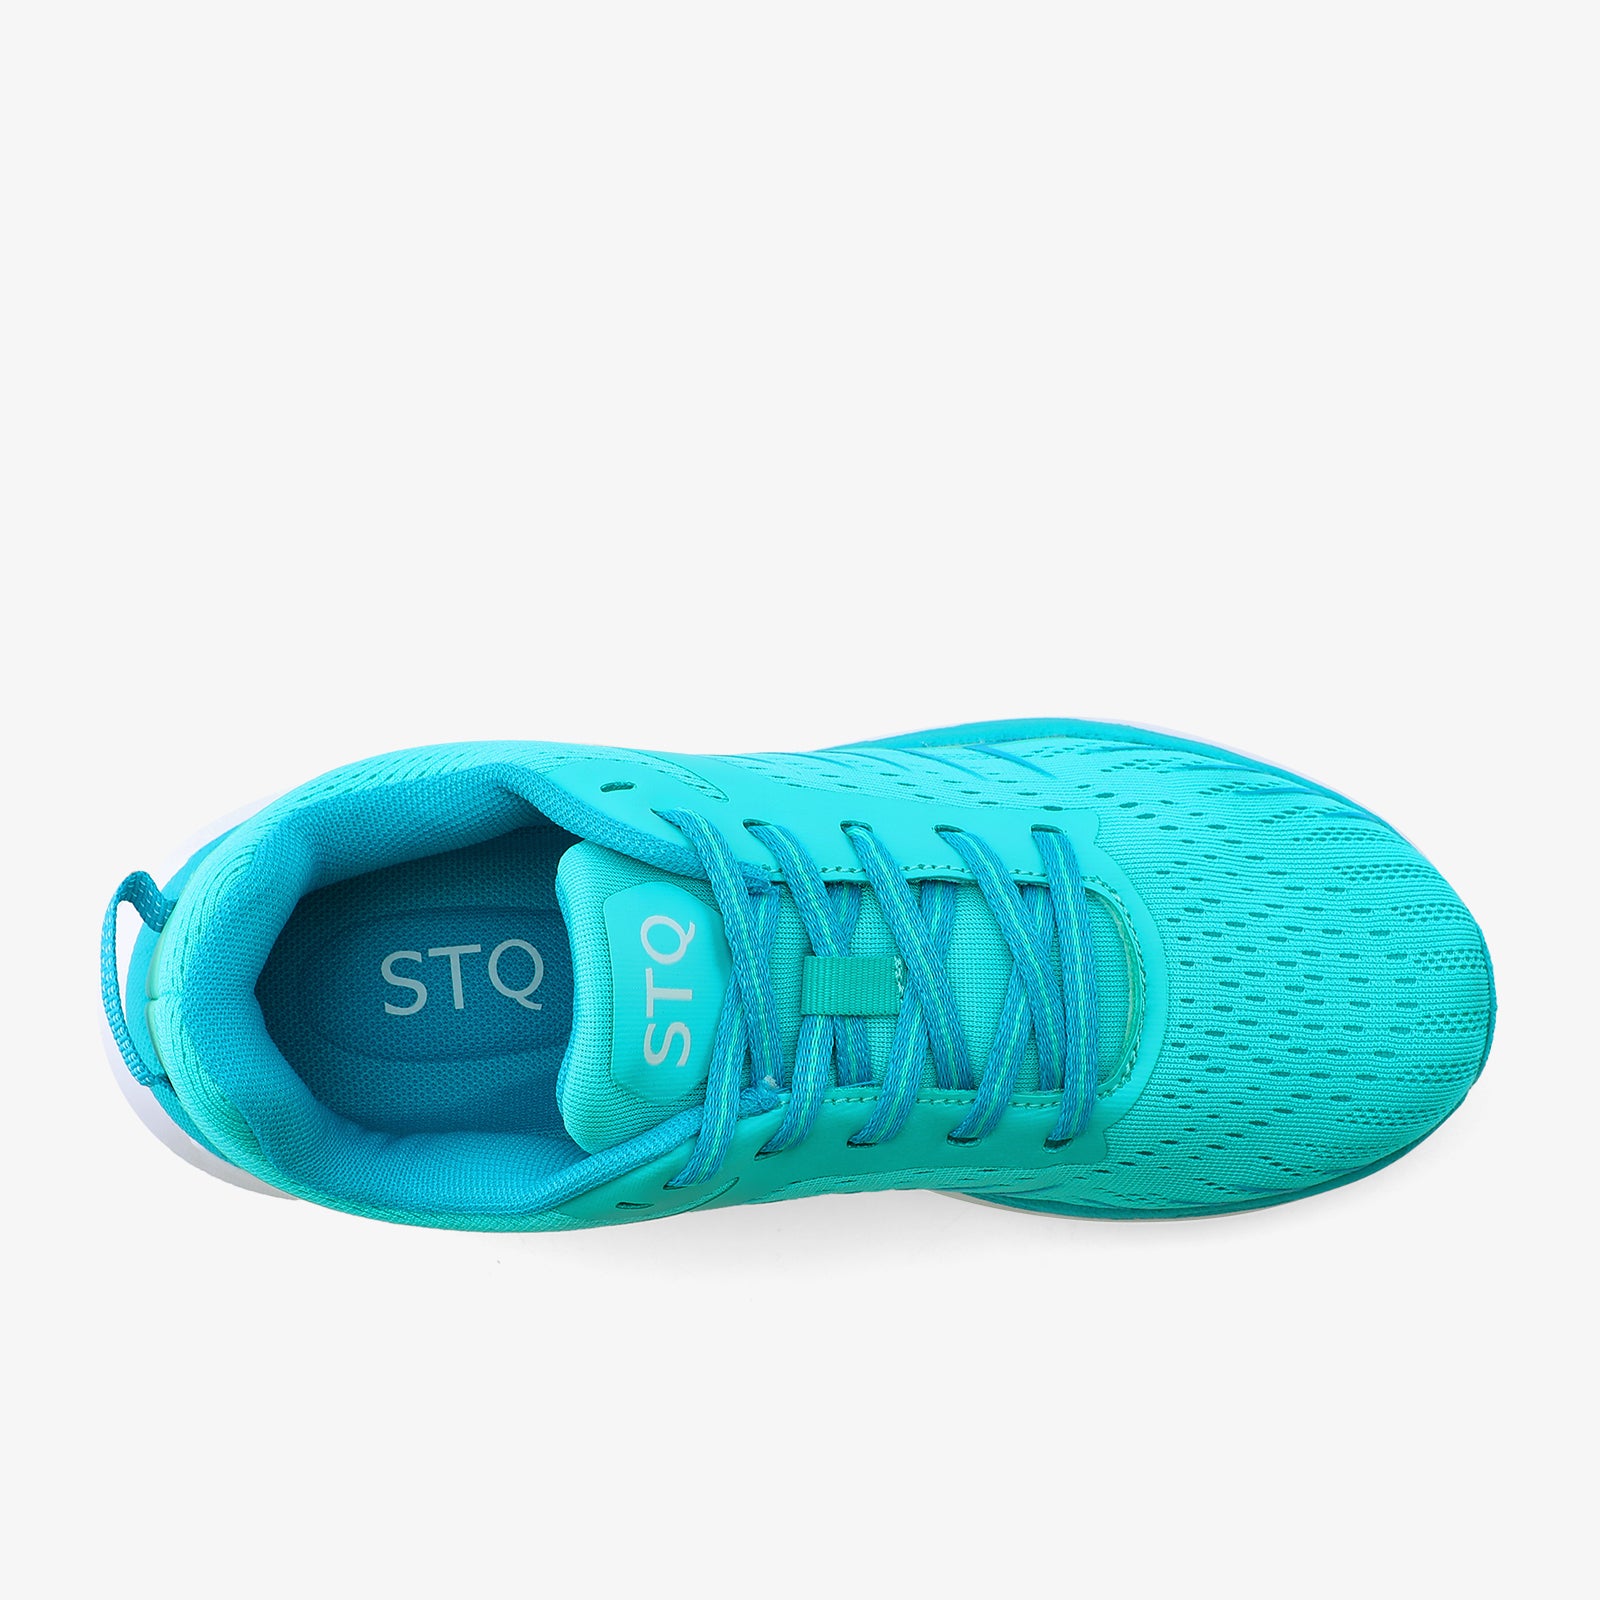 stq-cushioned-walking-shoes-fashion-sneakers-view